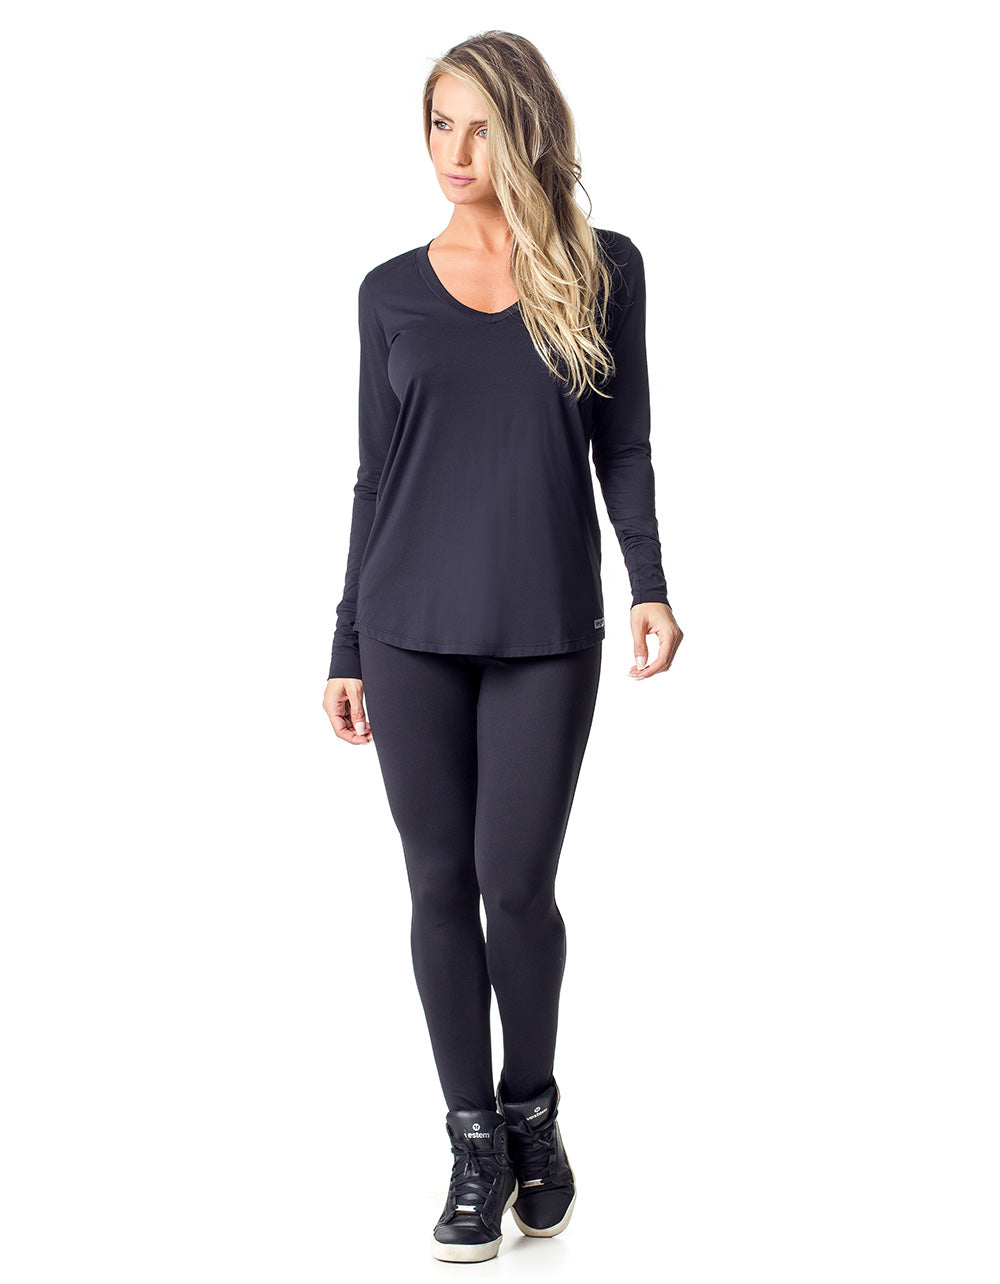 Vestem - Dry Fit Long Sleeve Shirt Janice Black - BML16.C0002